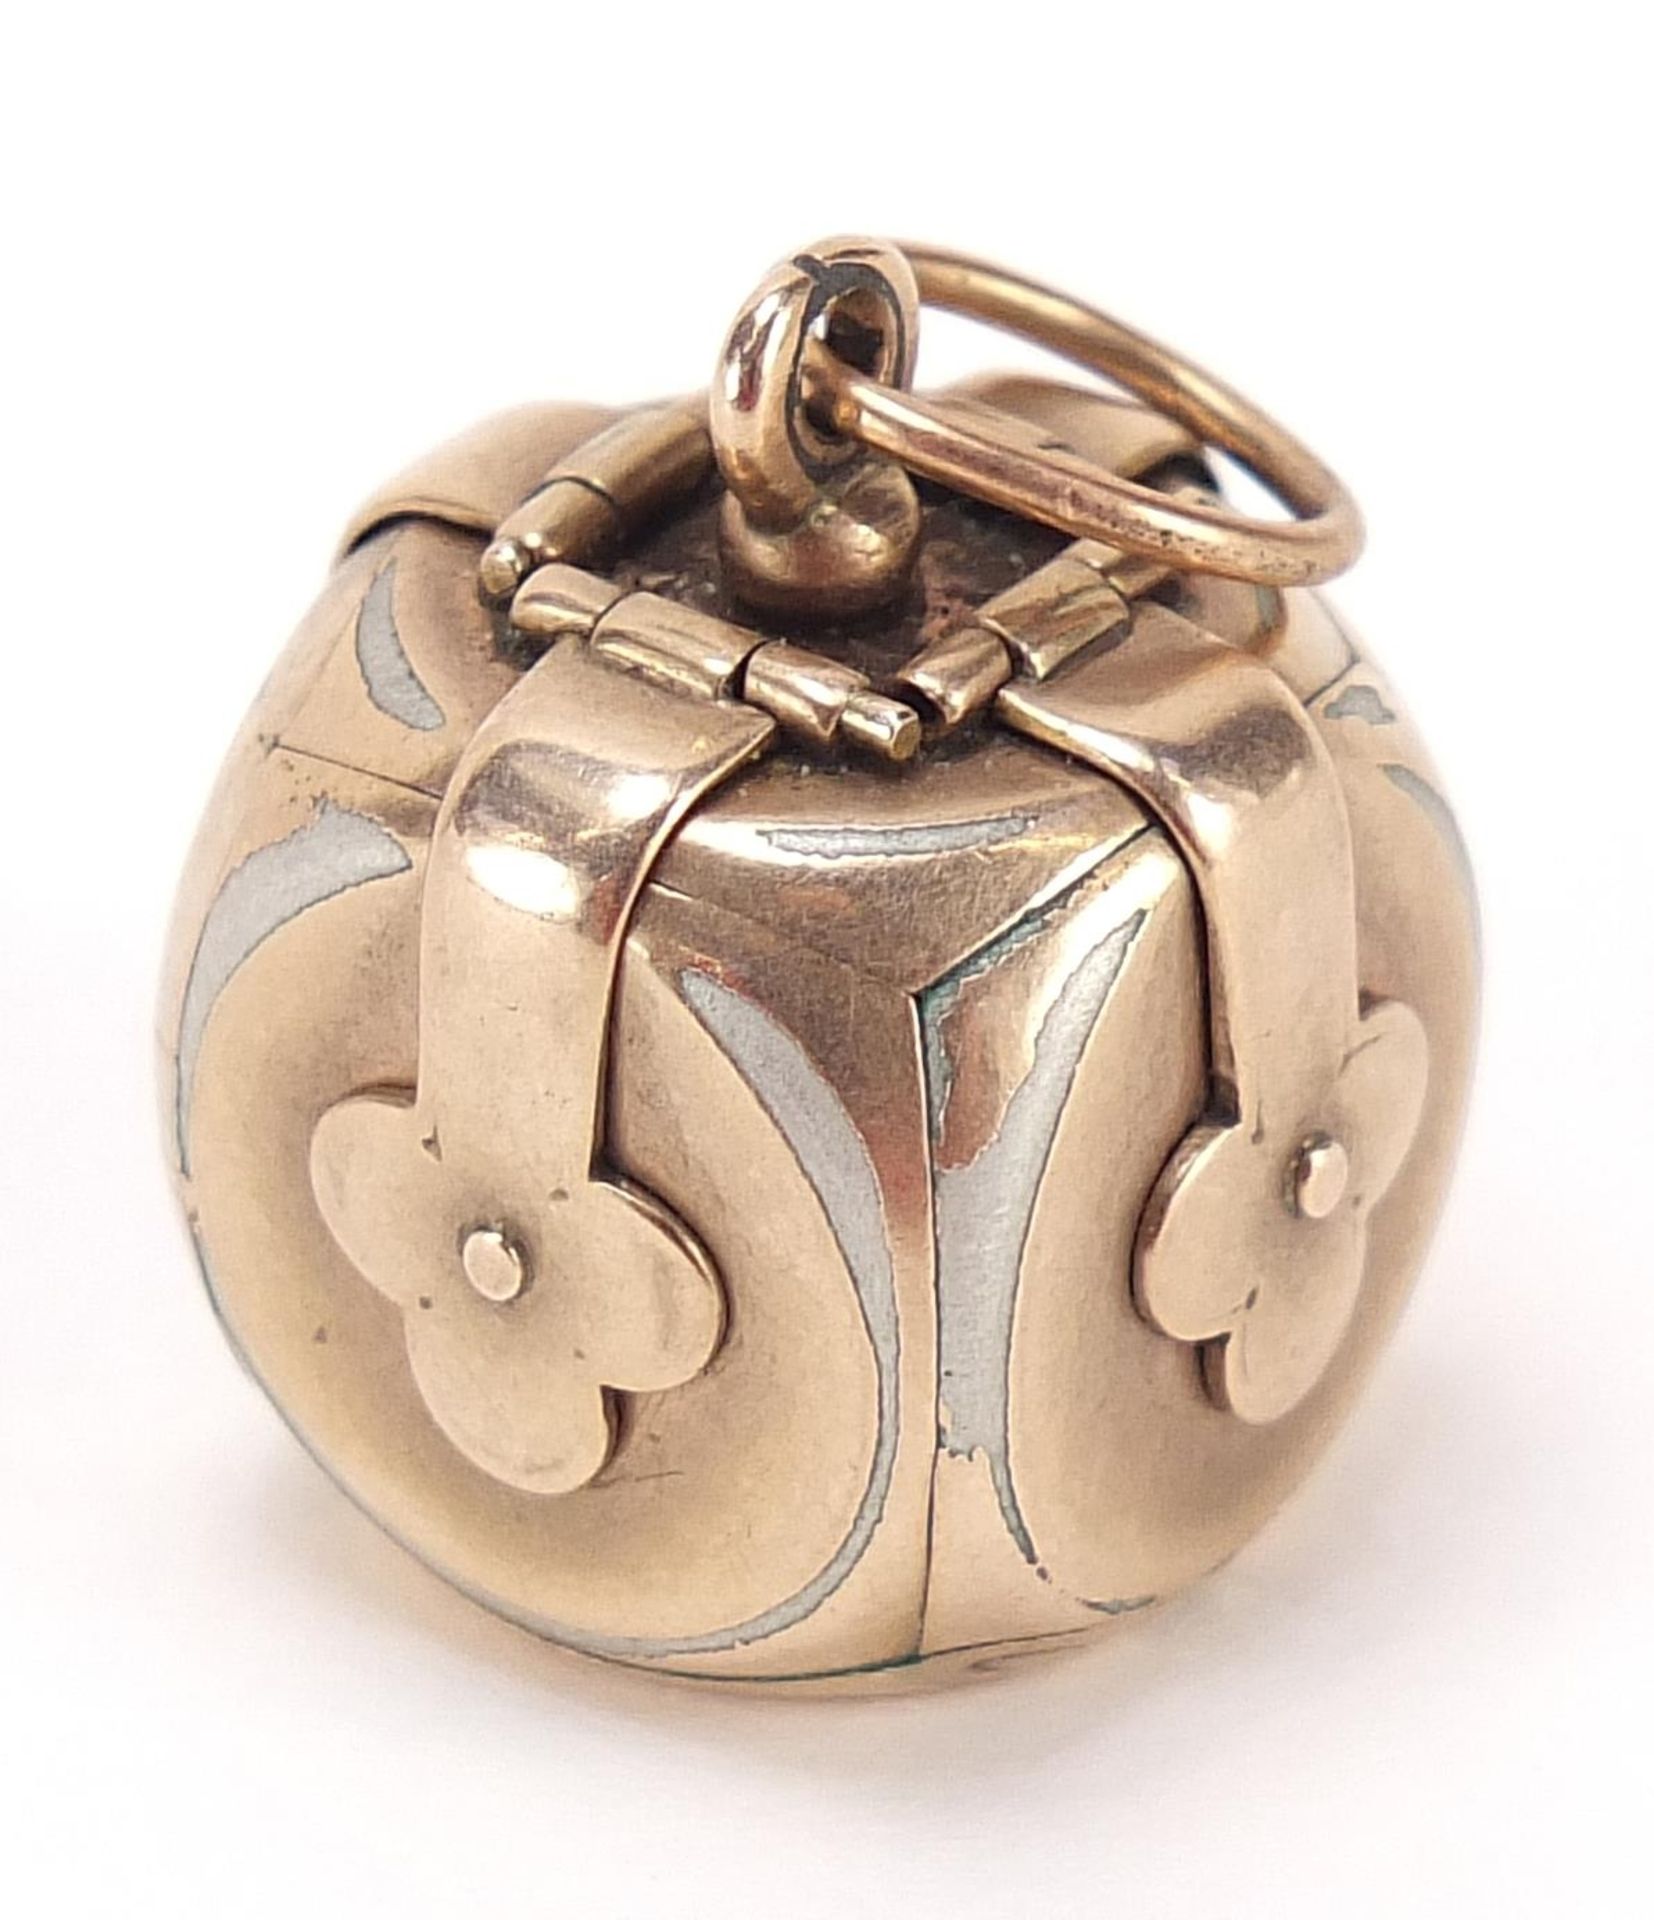 Silver gilt folding masonic ball pendant, 5.2cm high when open, 14.9g - Image 2 of 3